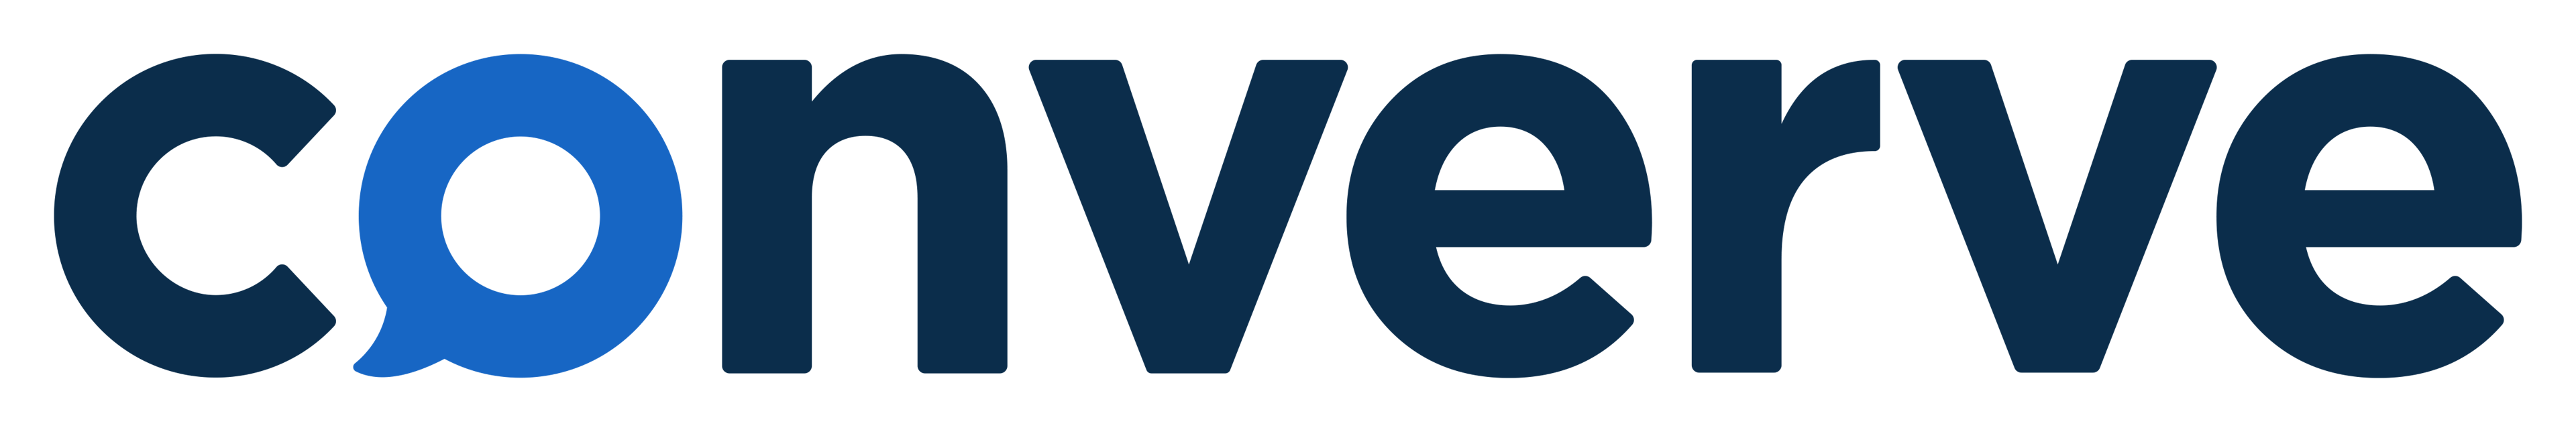 Converve Logo